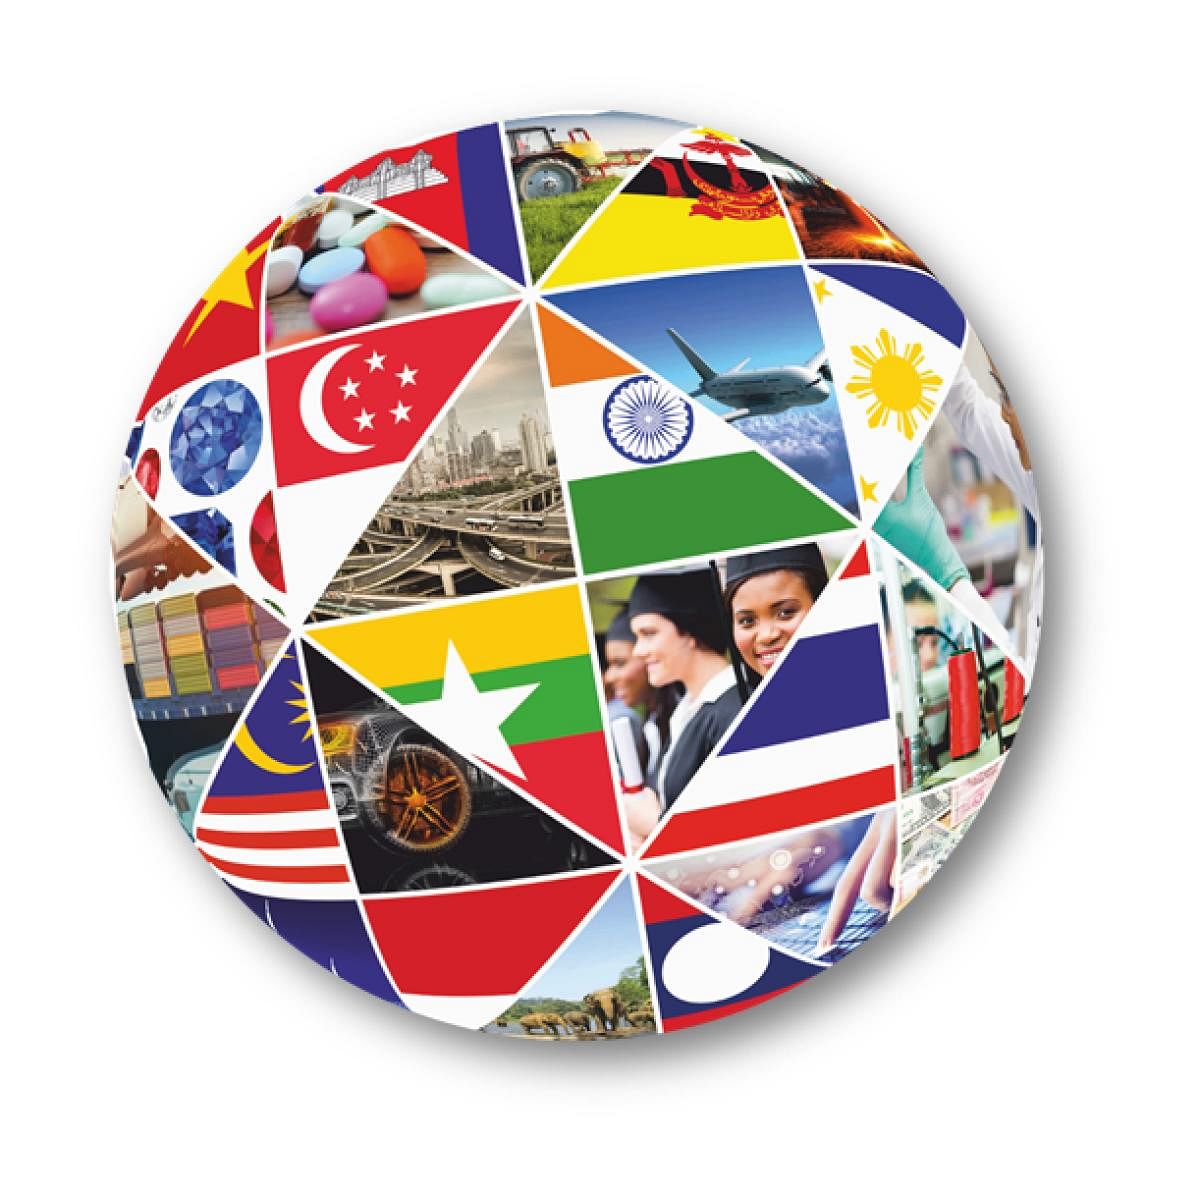 ASEAN summit logo 